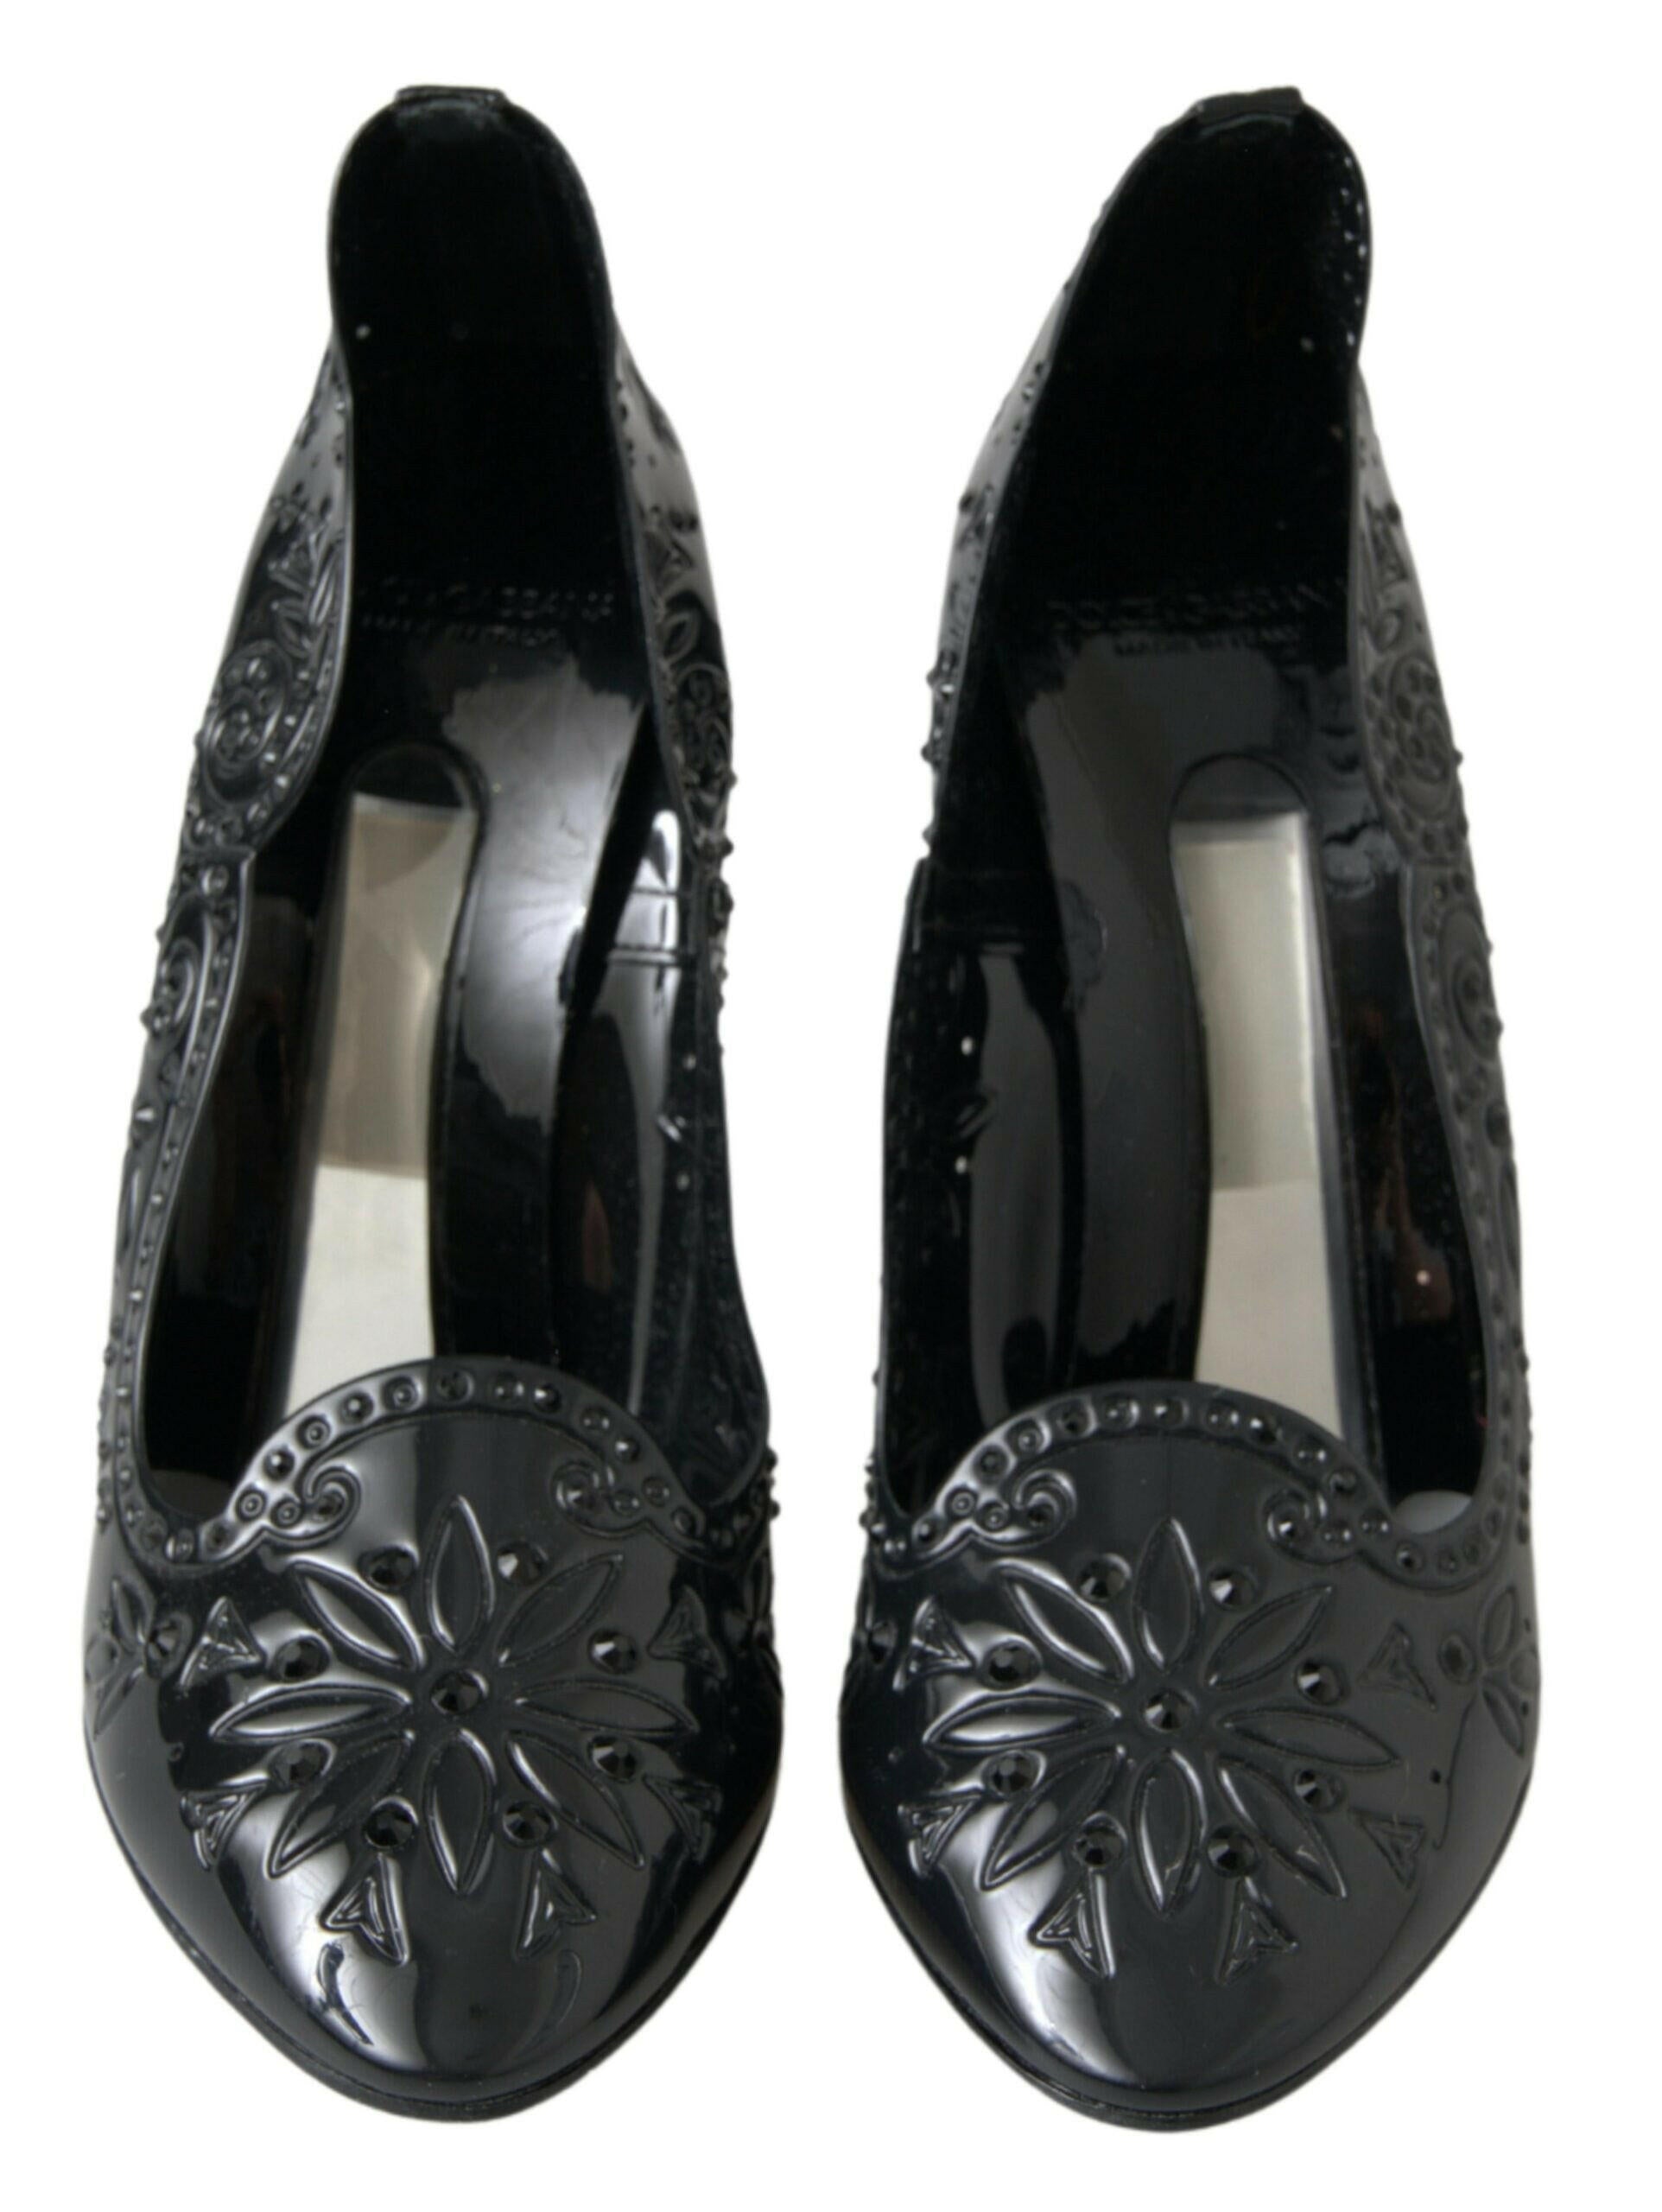 Dolce & Gabbana Black CINDERELLA Floral Crystal Heels Shoes - GENUINE AUTHENTIC BRAND LLC  